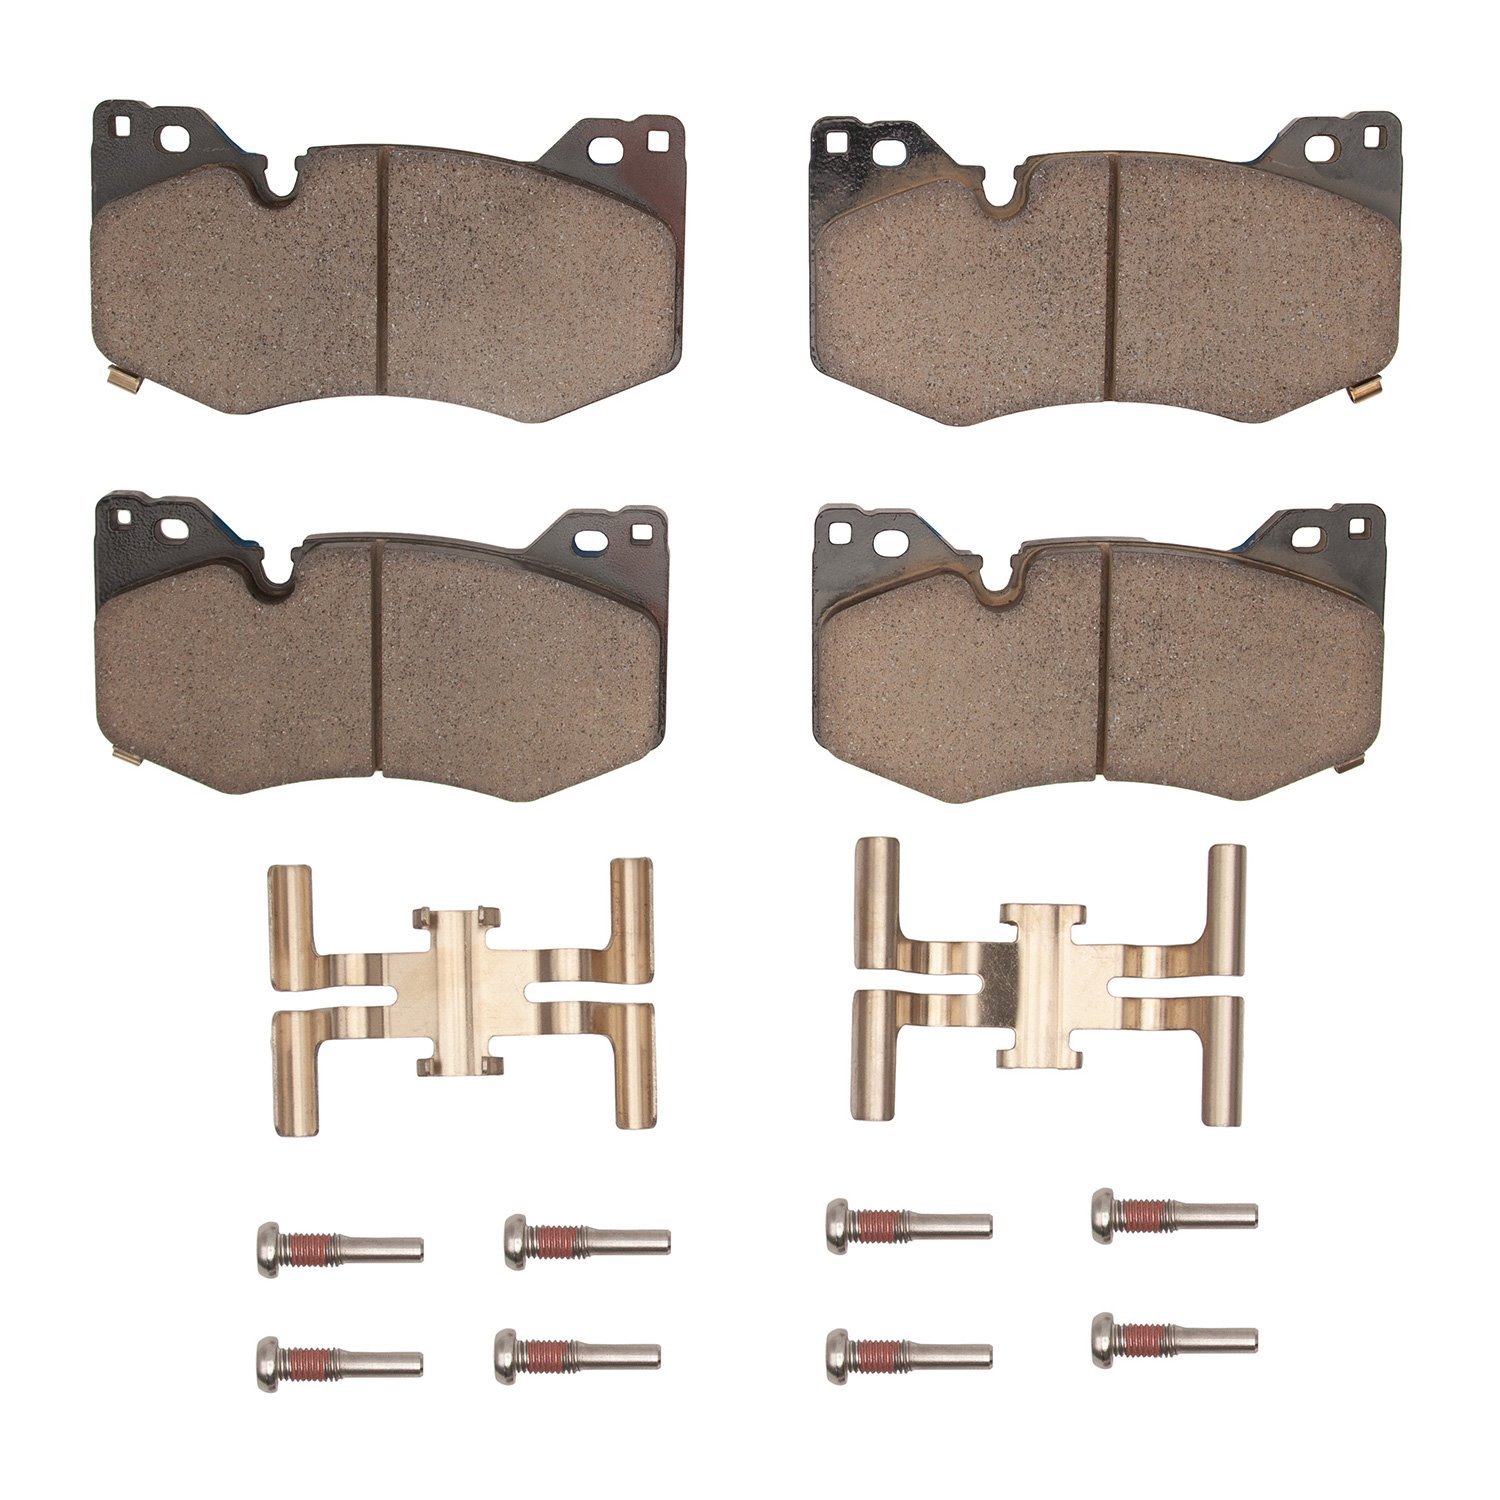 1552-2312-01 5000 Advanced Low-Metallic Brake Pads & Hardware Kit, Fits Select GM, Position: Front